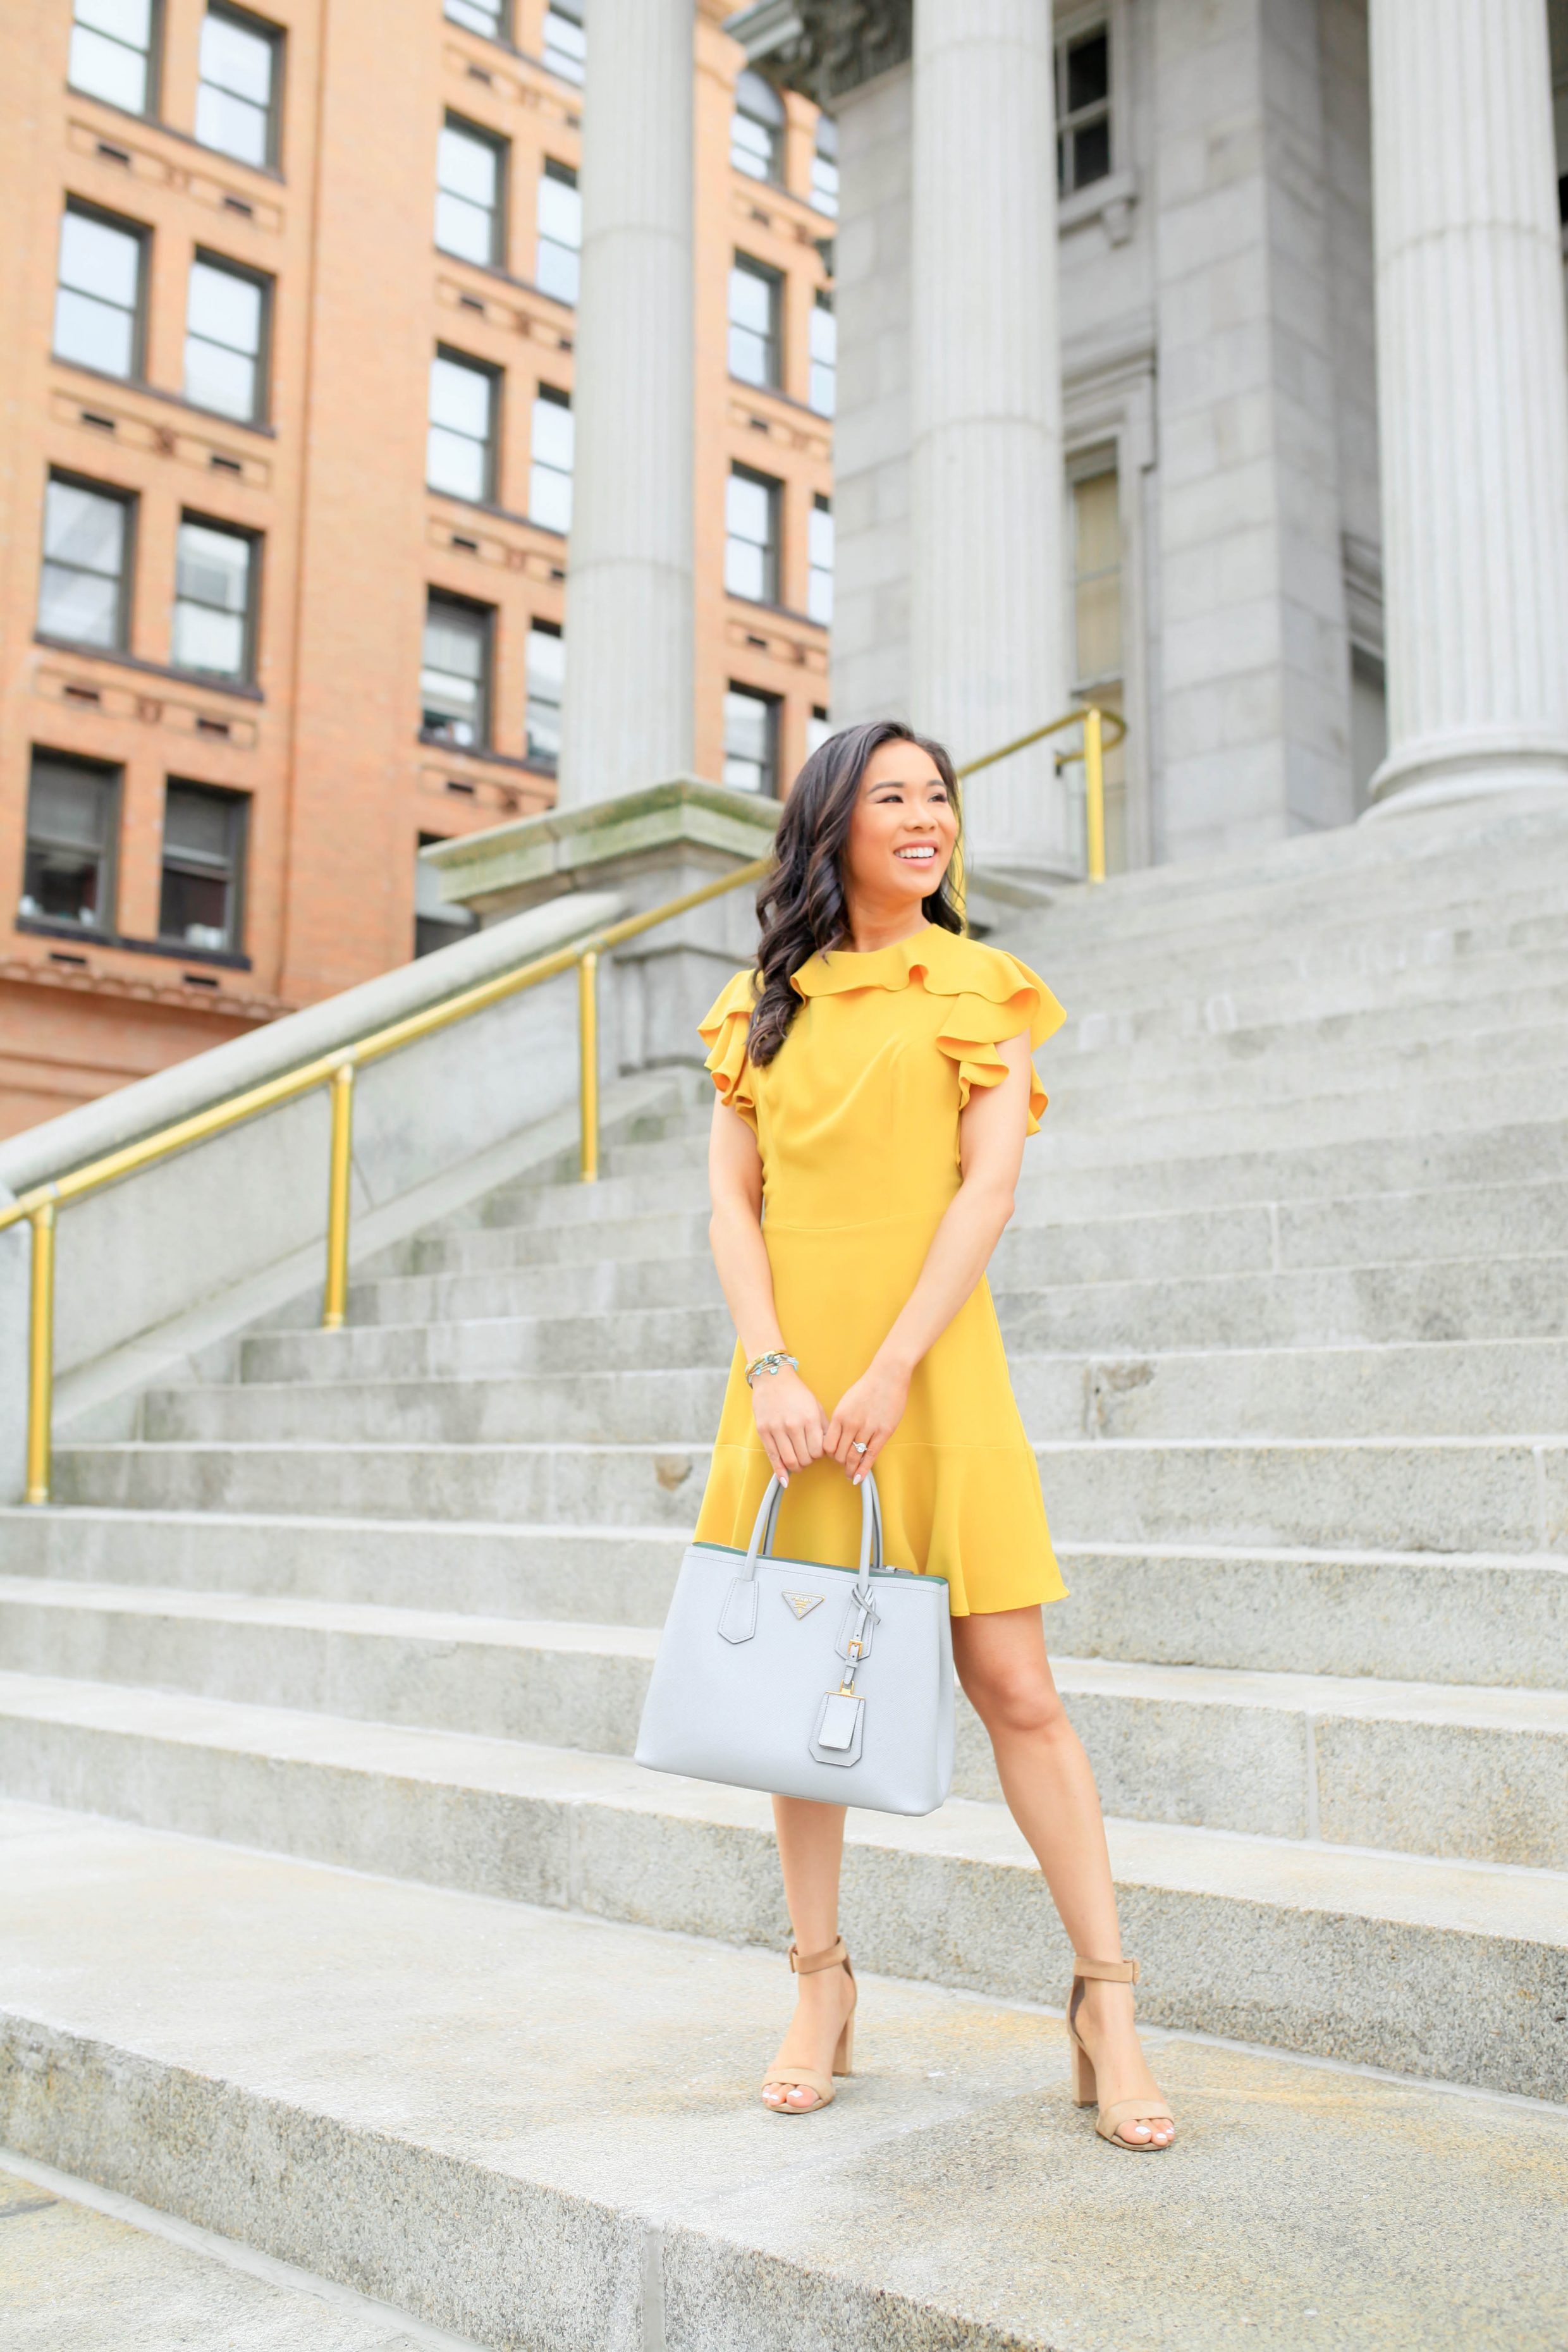 Hoang-Kim wears a marigold ruffle dress with suede block heels and Prada Cuir tote